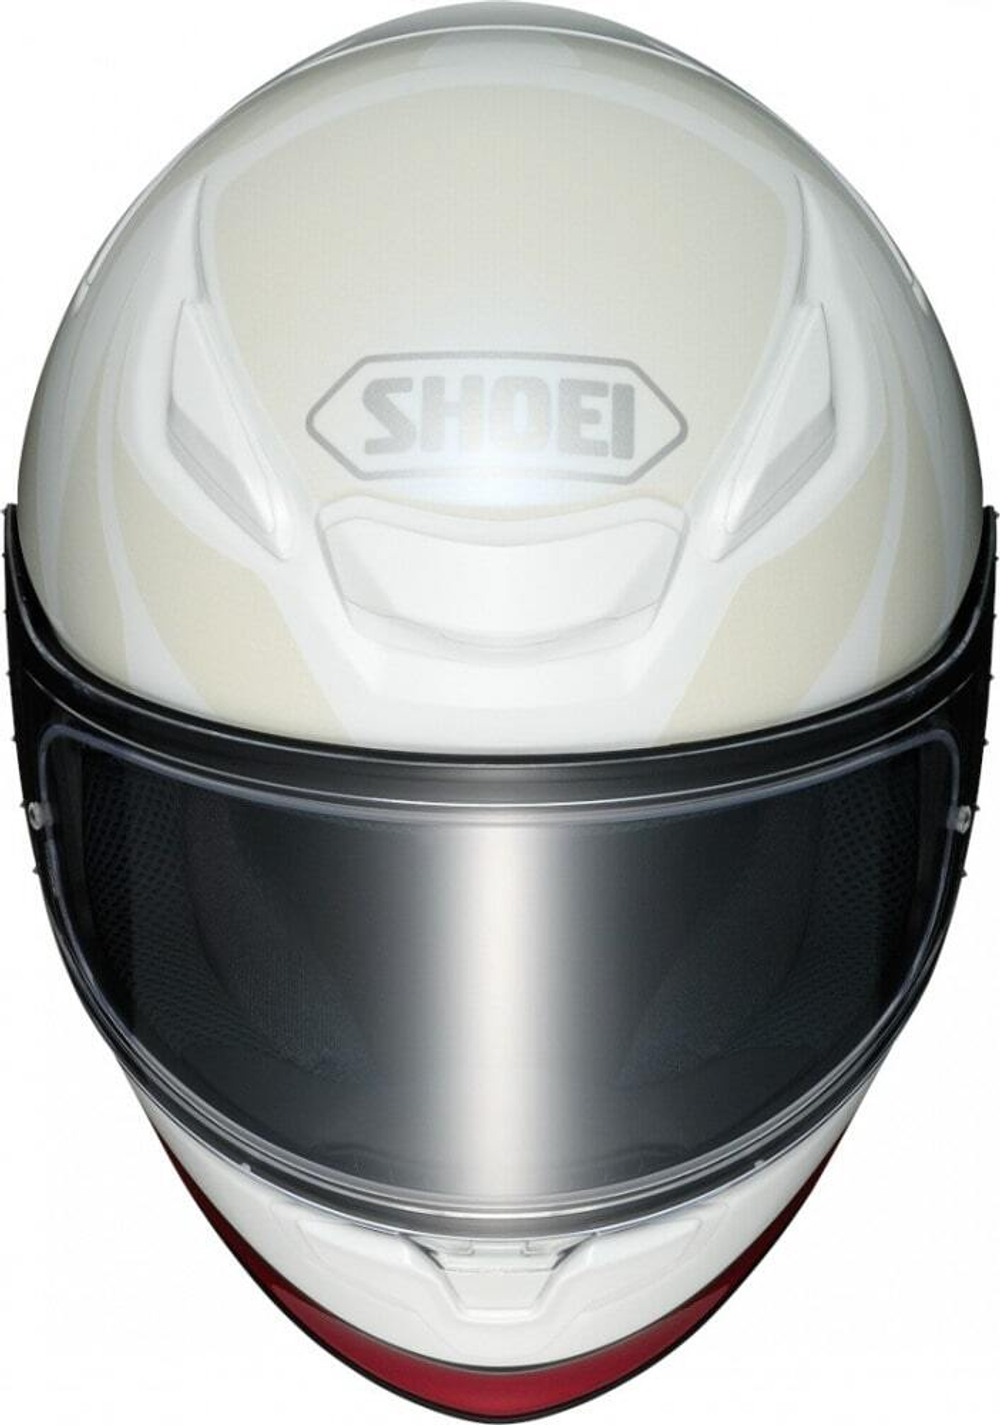 SHOEI Шлем мотоциклетный интеграл NXR 2 NOCTURNE зелено-черно-белый